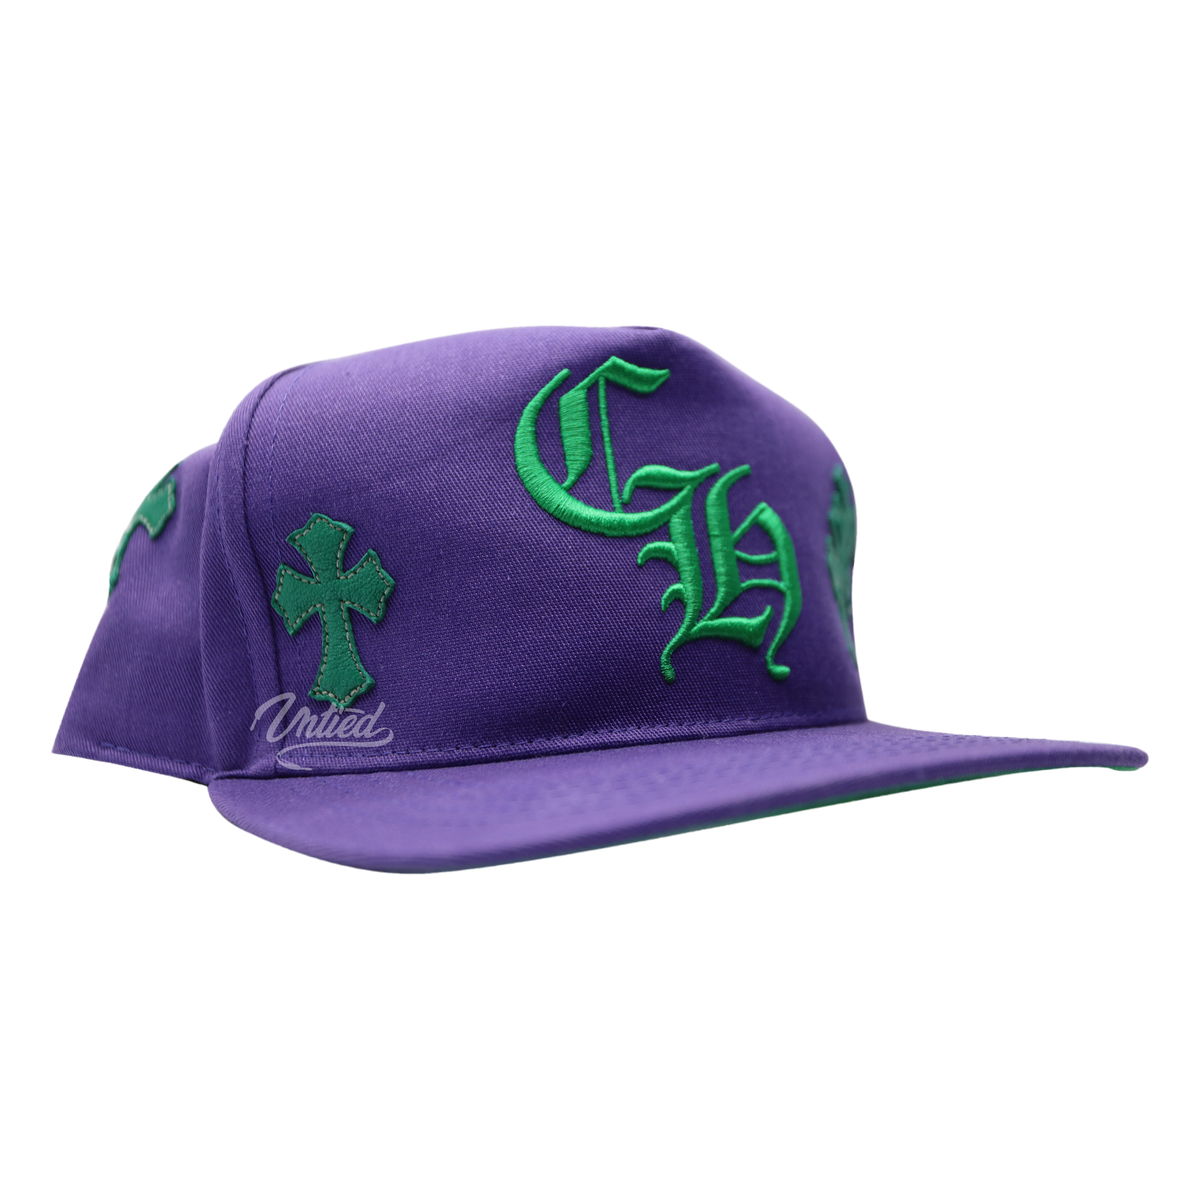 Chrome Hearts Cross Patch Baseball Hat "Purple/Green"